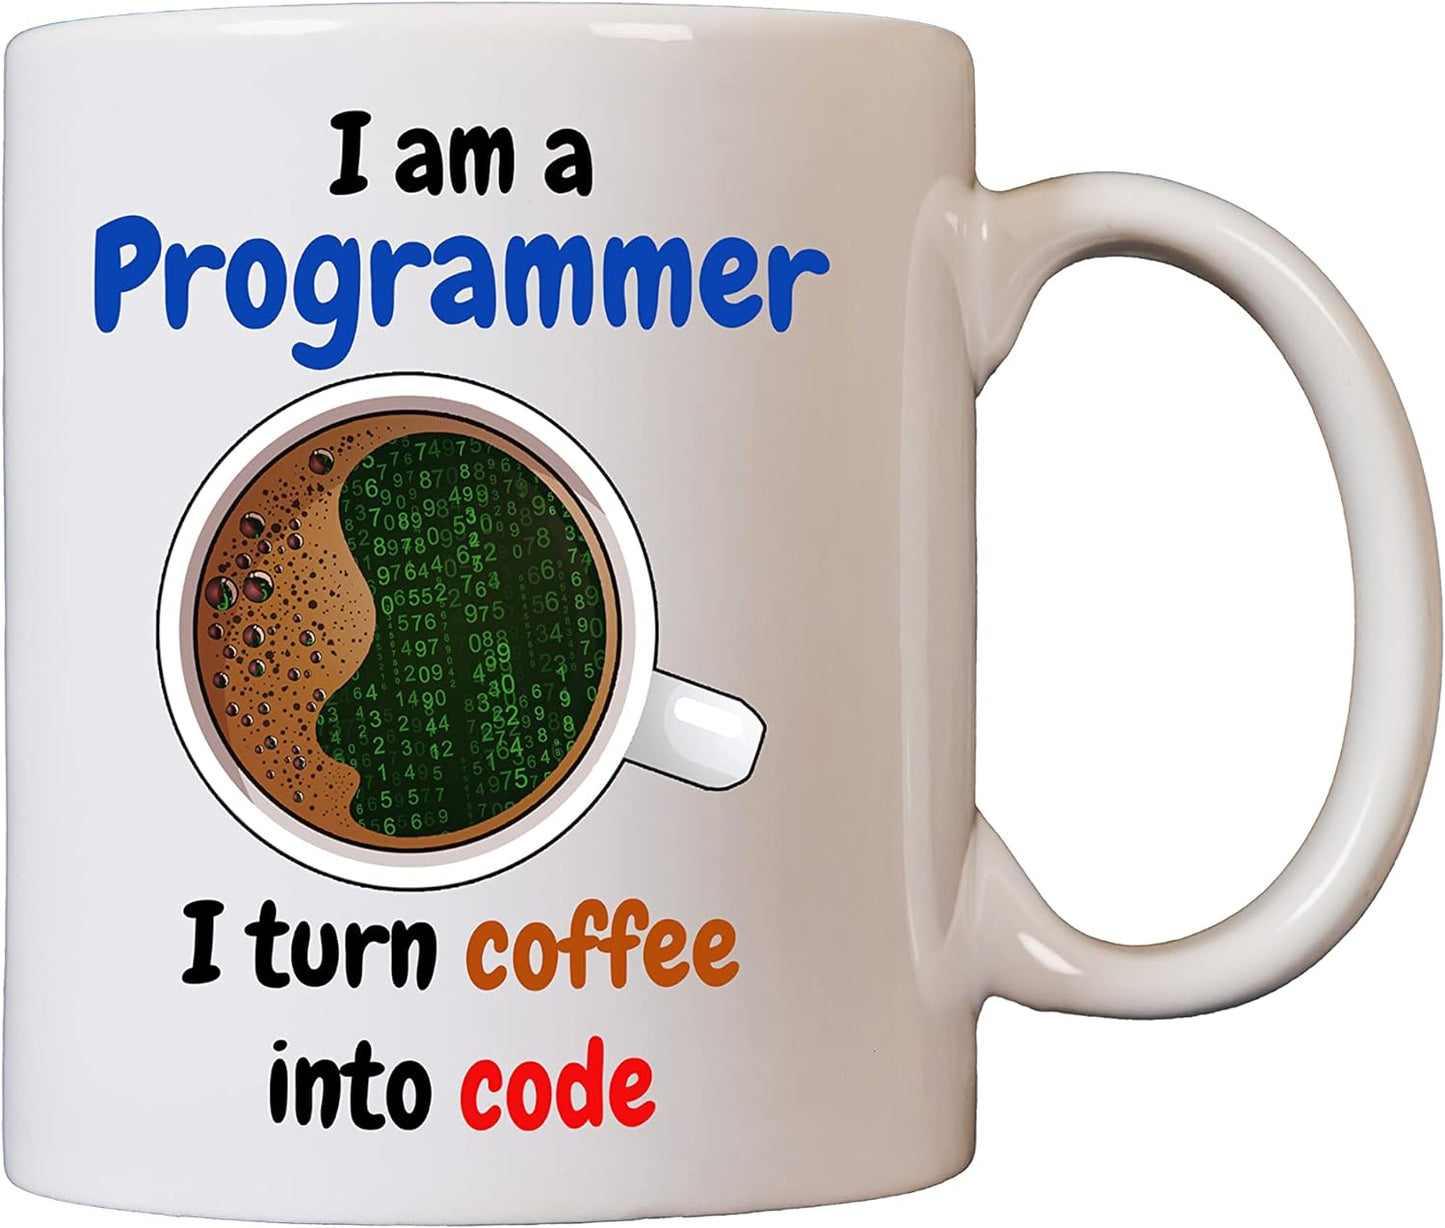 Funny Programmer Mug - I Turn Coffee into Code - 11oz White Ceramic - Microwave and Dishwasher Safe - Printed on Both Sides